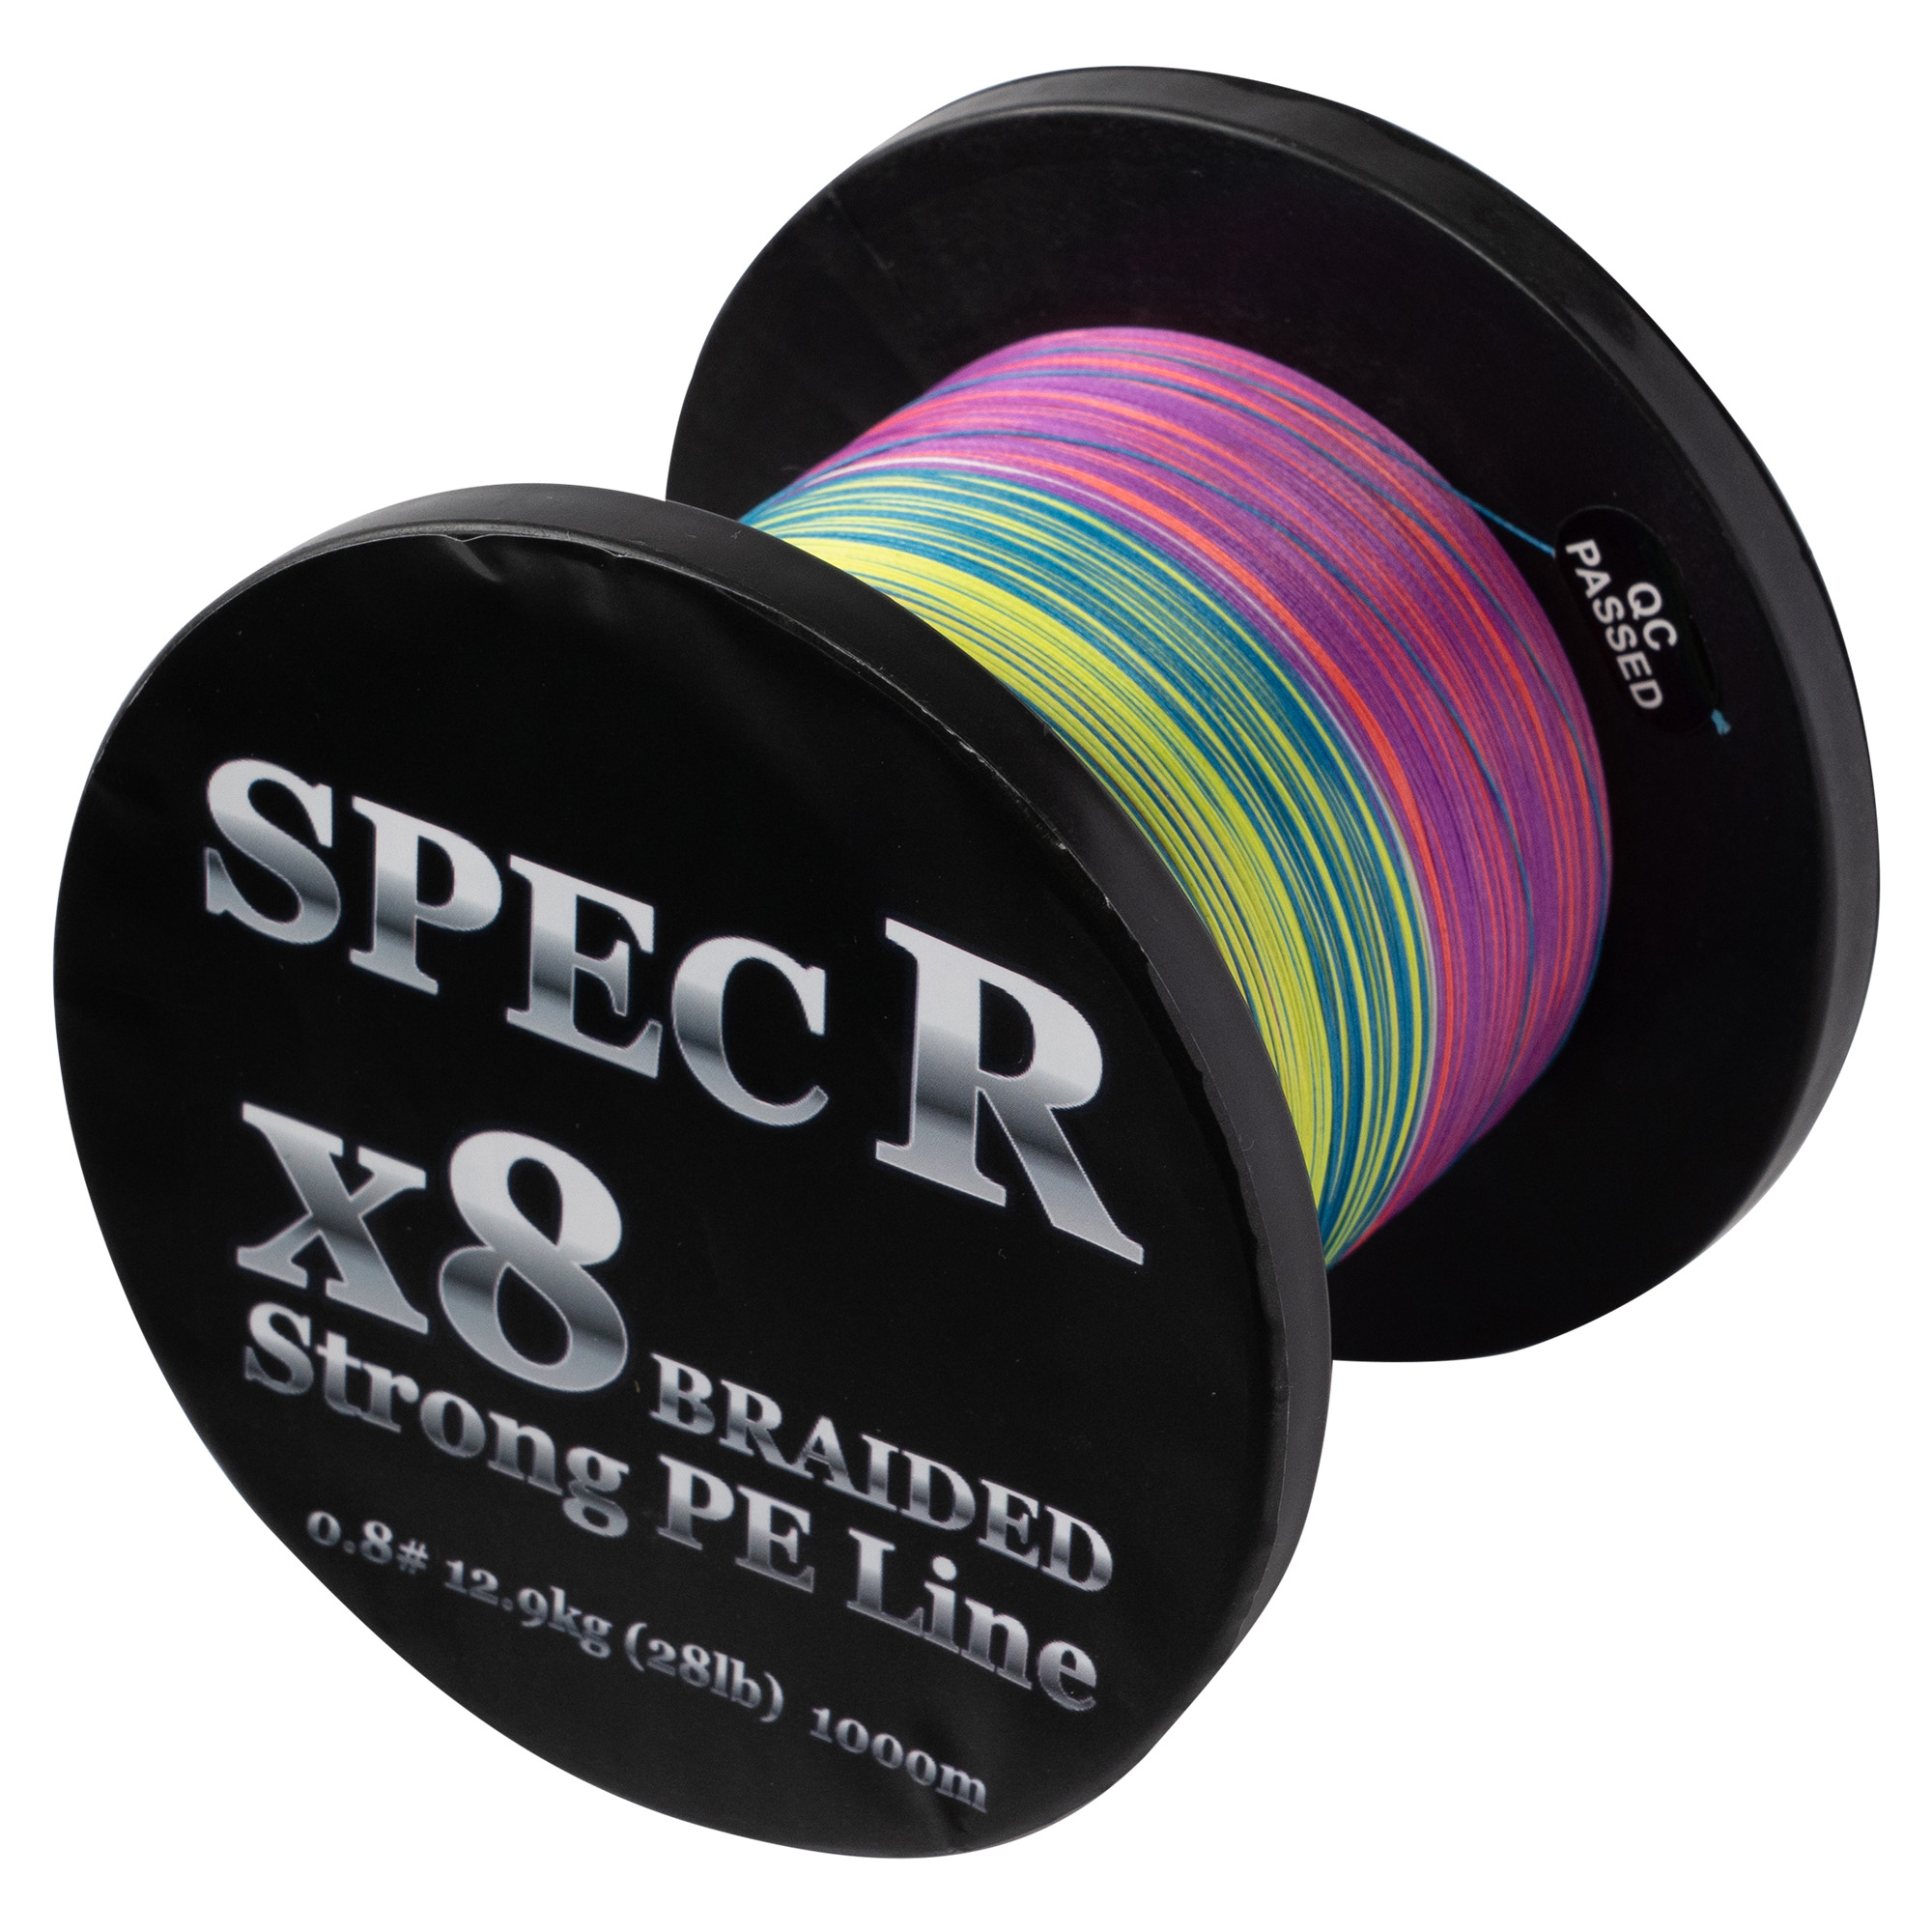 specR PEライン 0.8号 (国産 1.5号 相当) 8本編み (8編)1000m 高強度PEライン(0.8号 (国産1.5号 相当)  0.14mm 12.9kg 28lb)